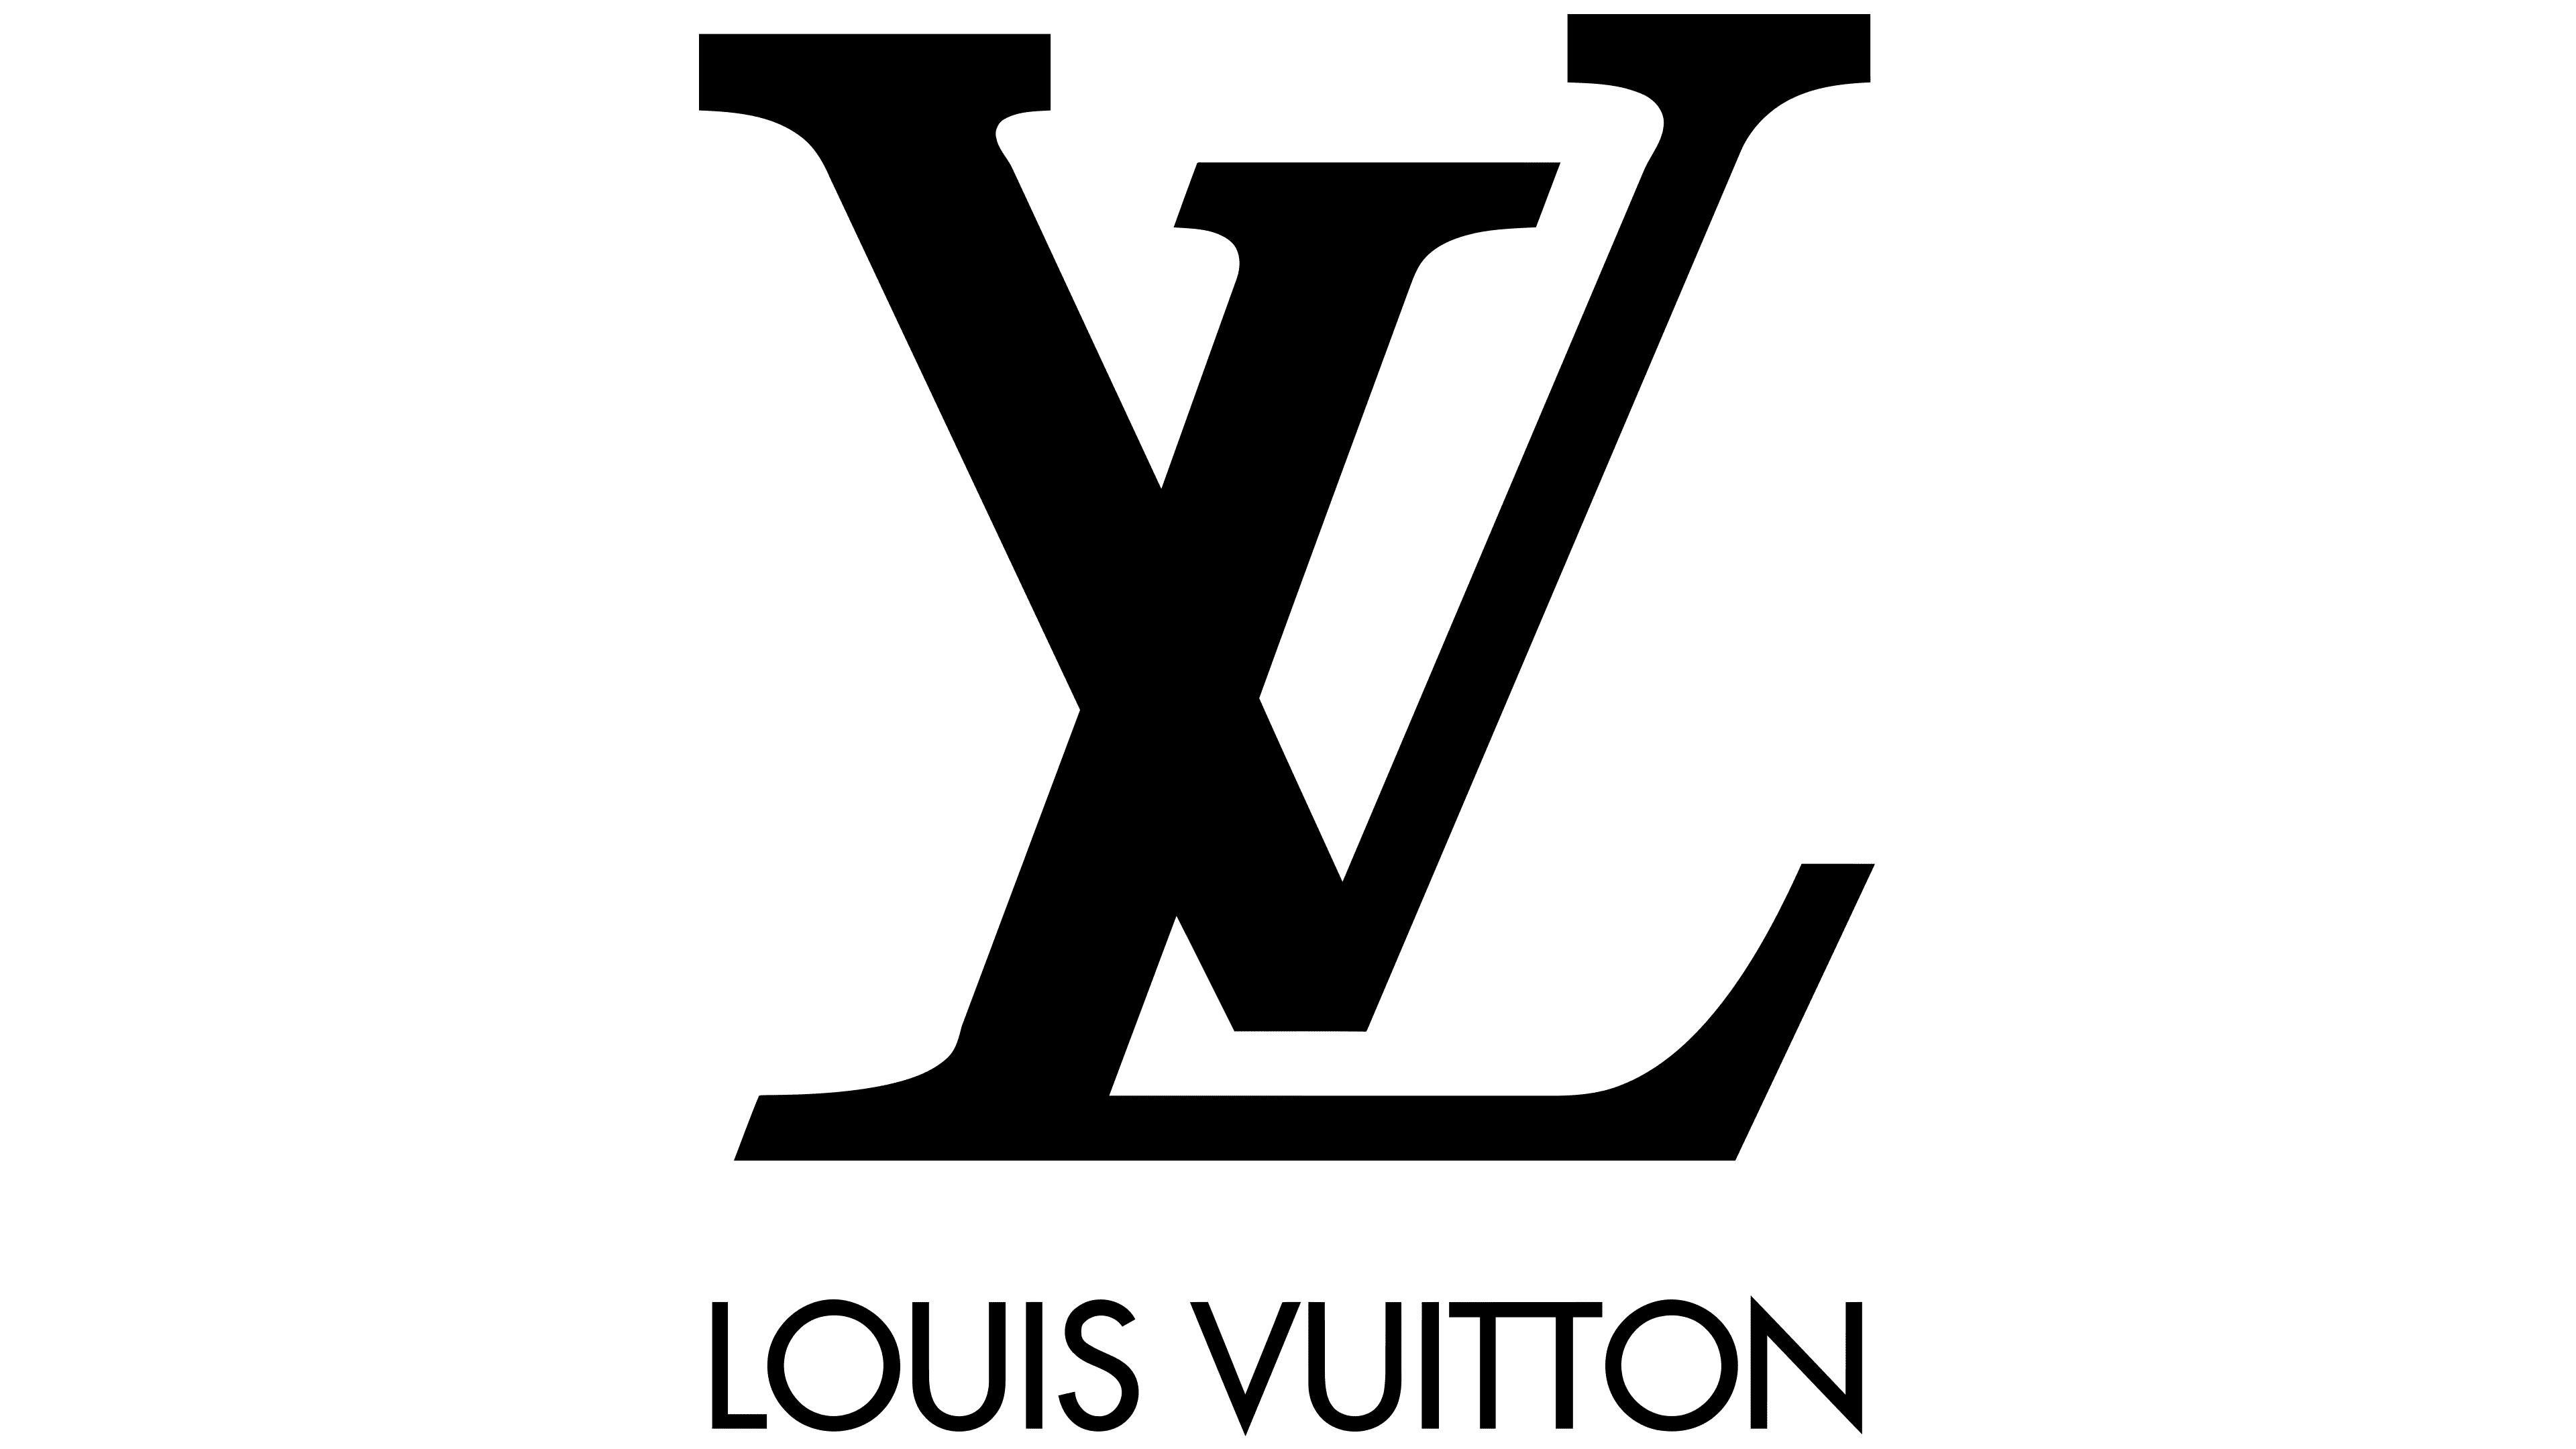 Louis Vuitton joins Chinas JDcom amid online luxury battle  Vogue  Business